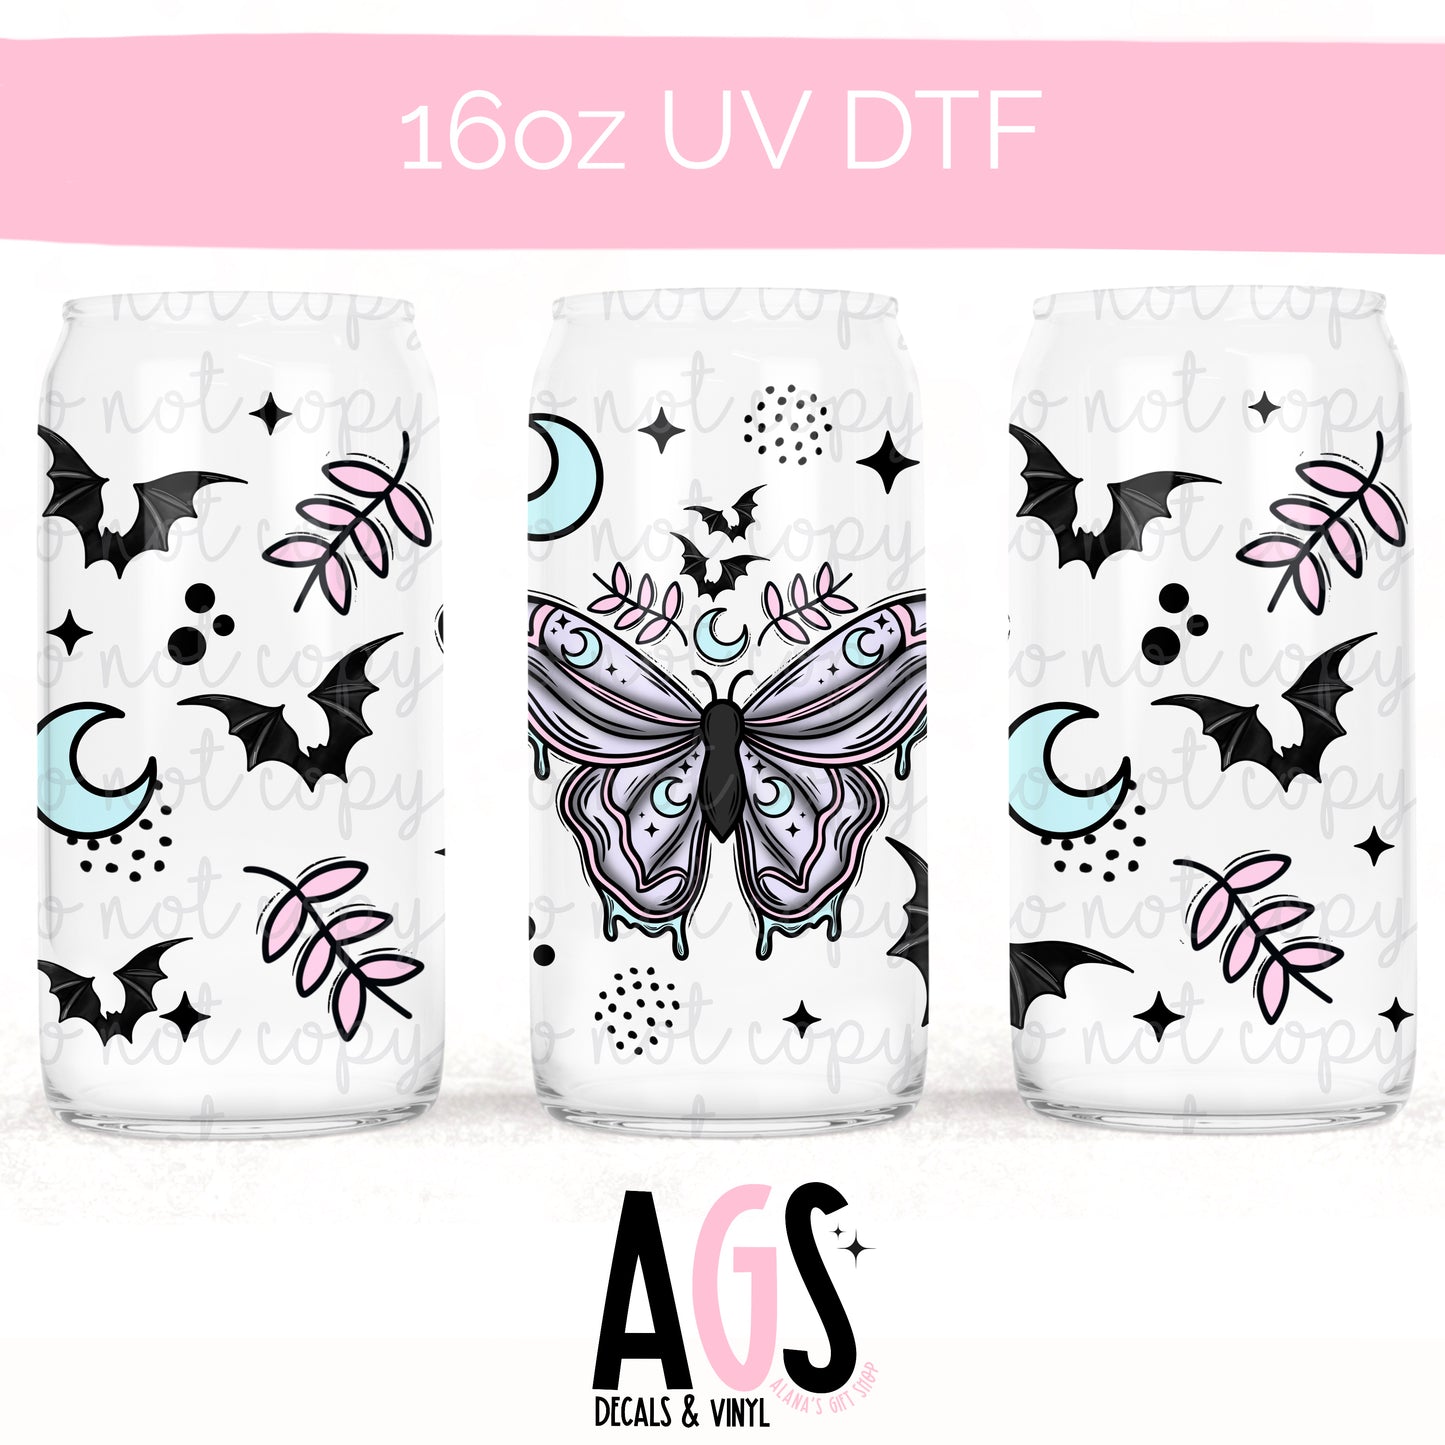 UV DTF- 008 Celestial Moth